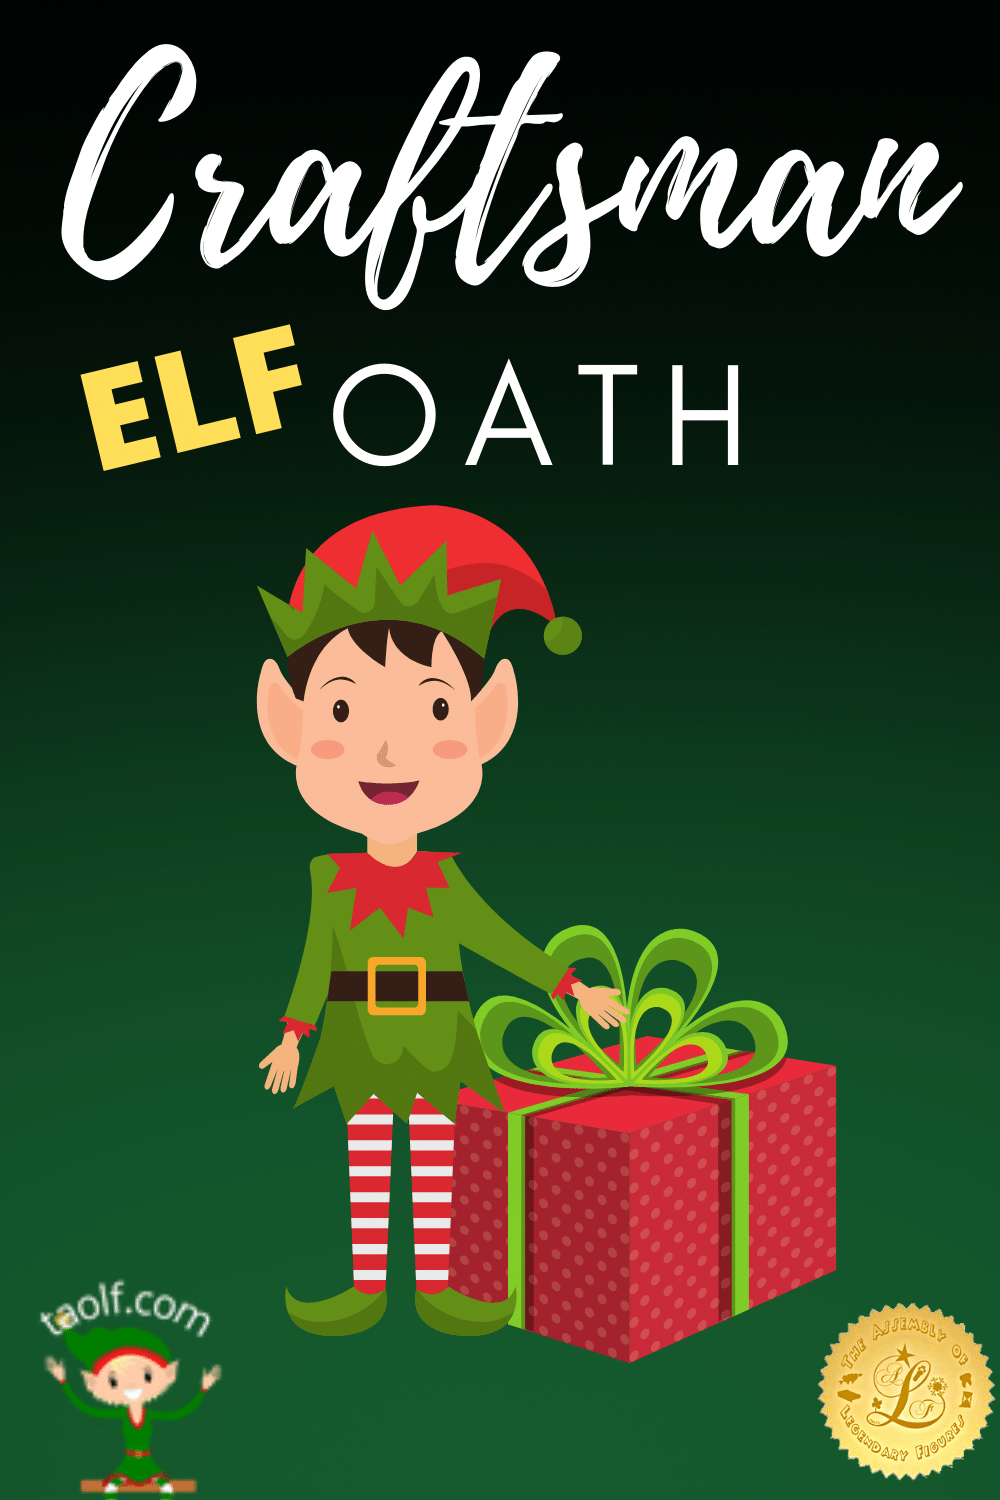 The Craftsman Elf Oath